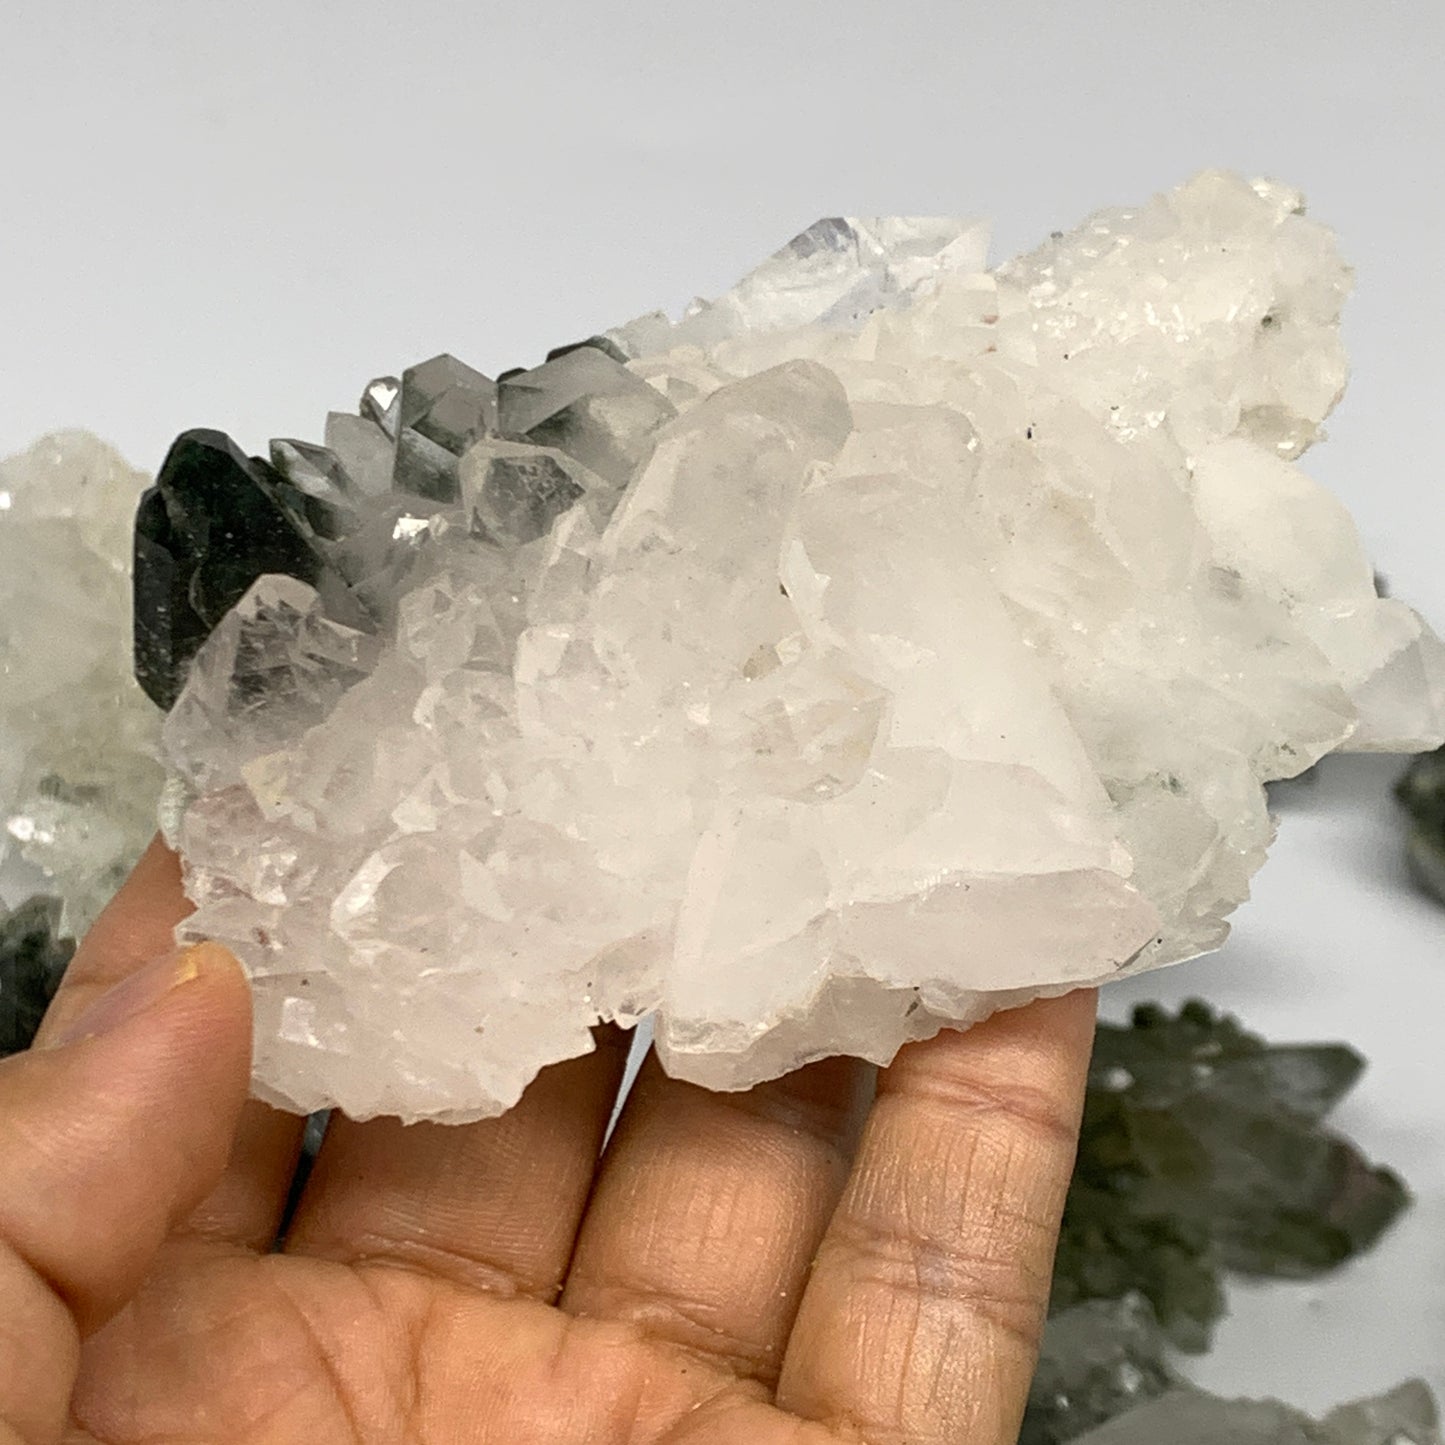 4 lbs, 2.9"-4.3", 11pcs, Chlorine Quartz Minerals Specimens @Pakistan, B27746